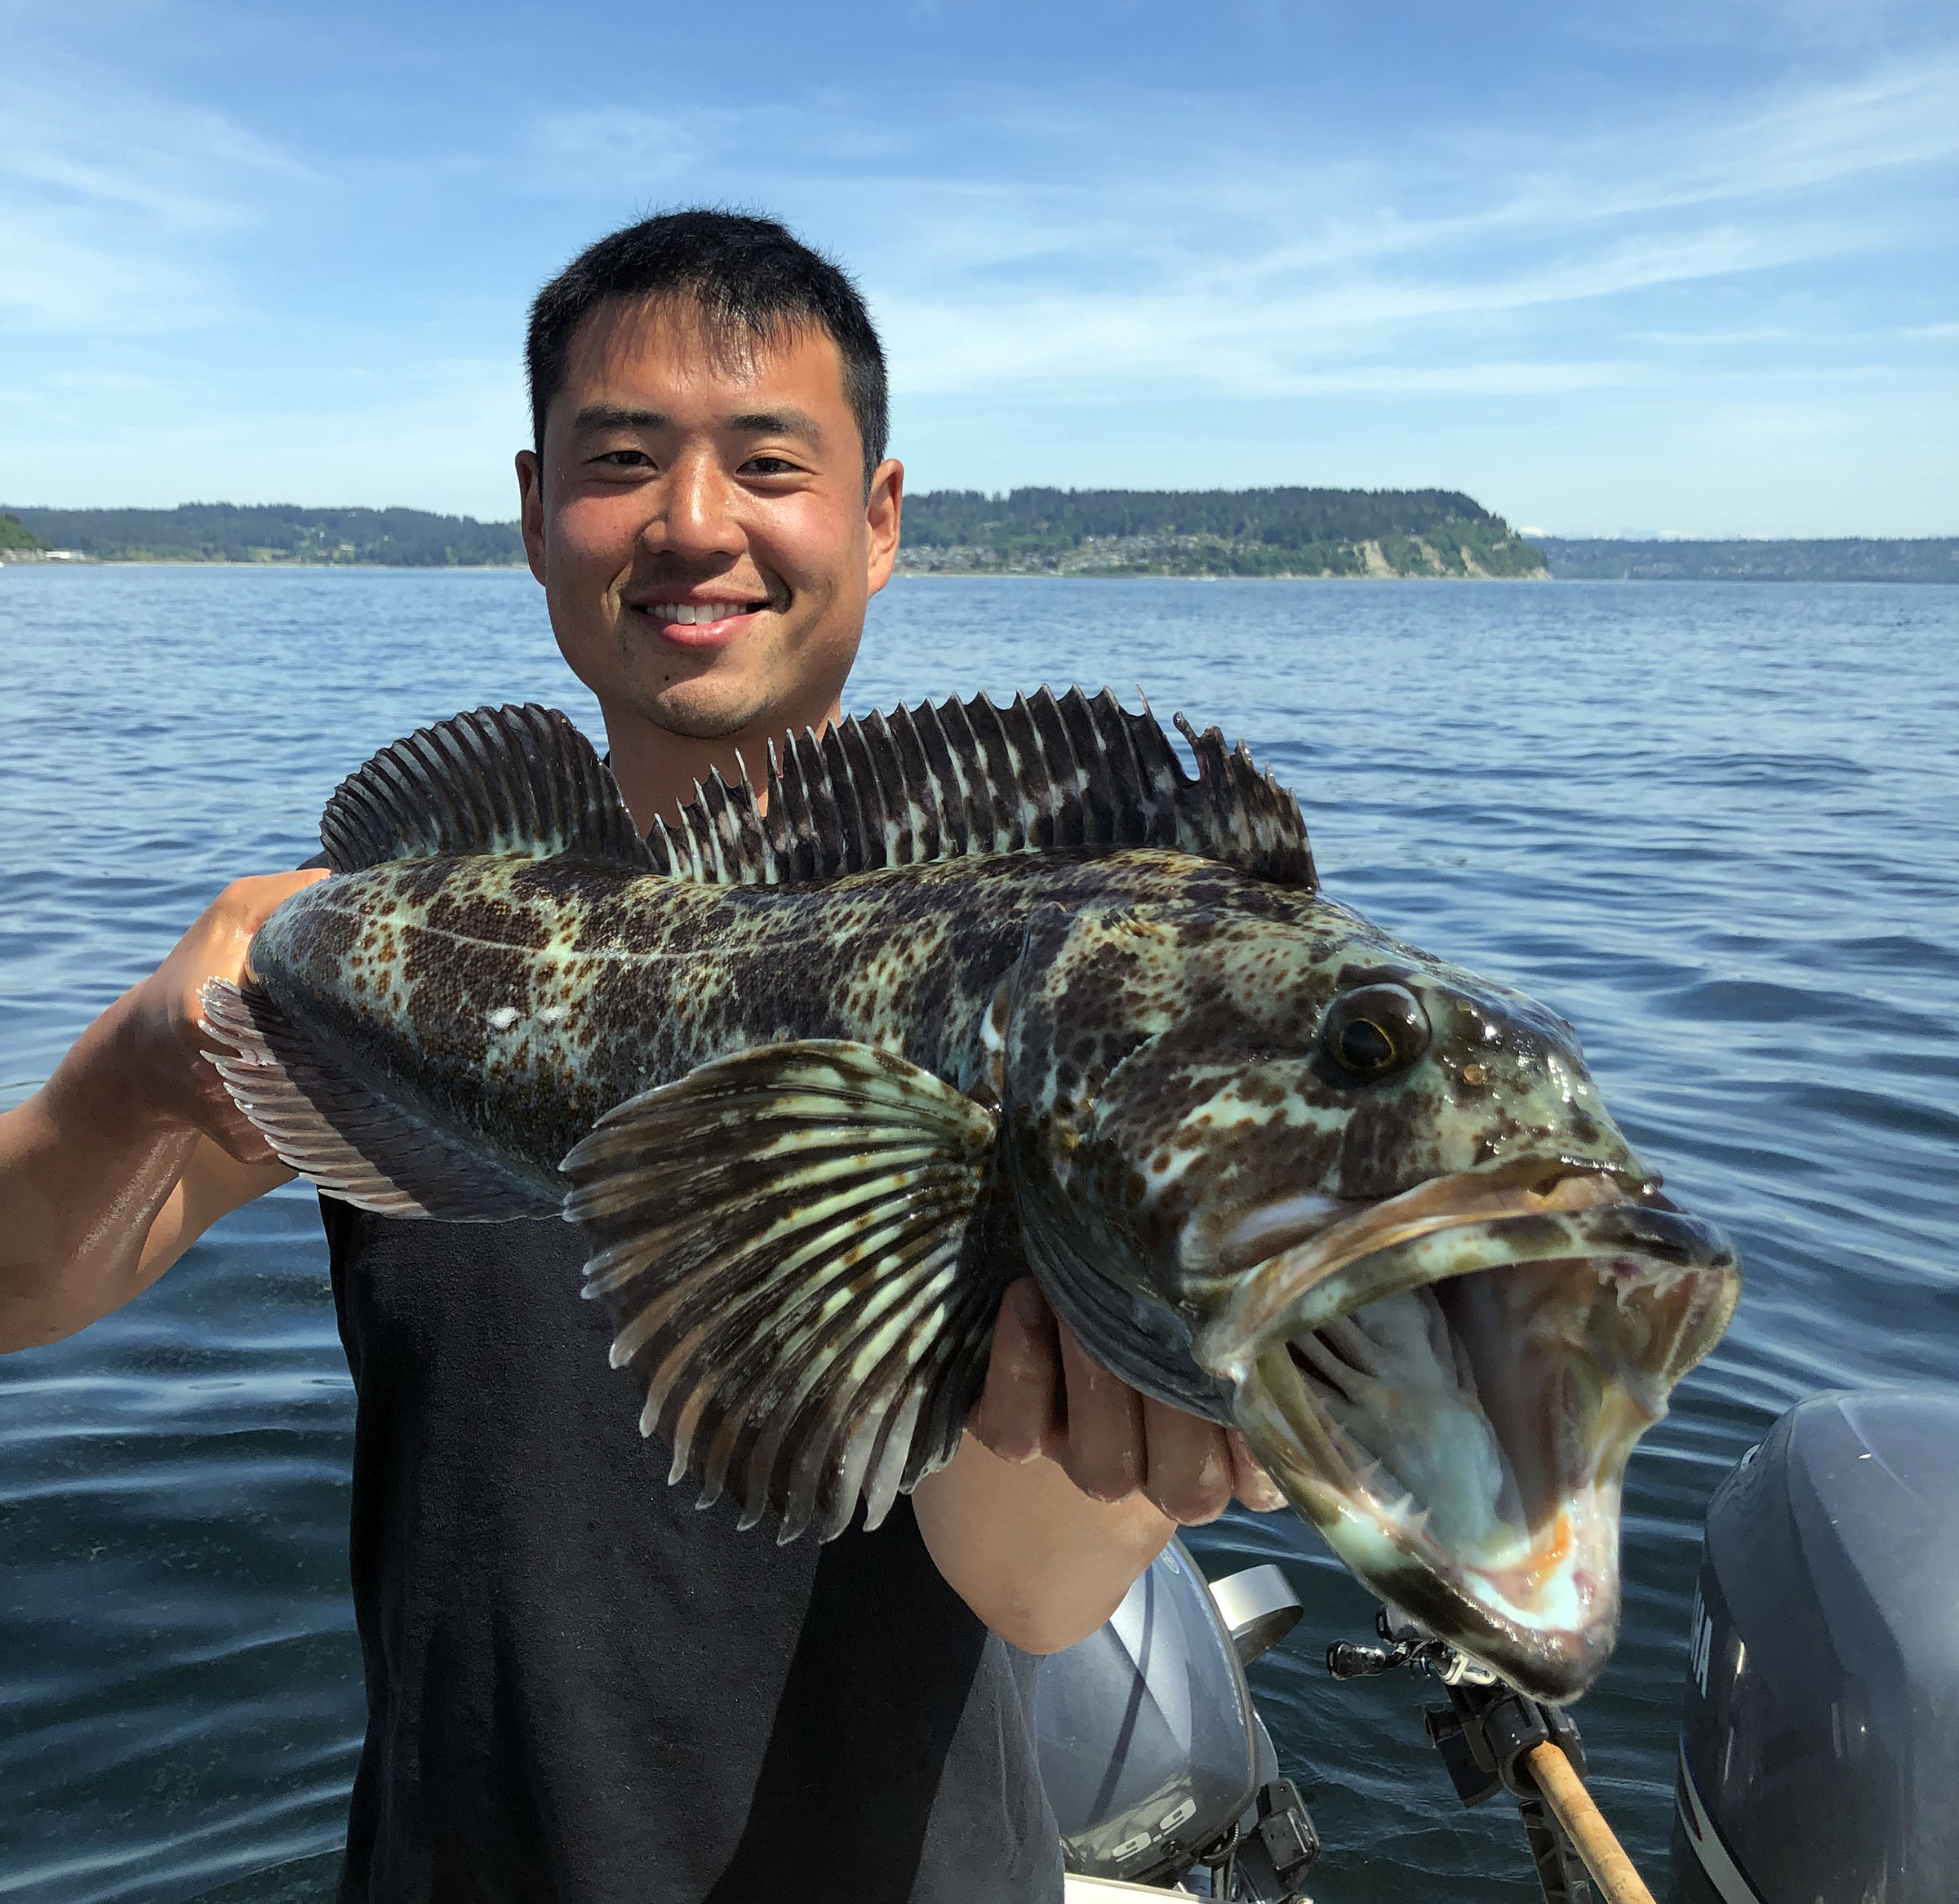 Puget Sound Lingcod Fishing